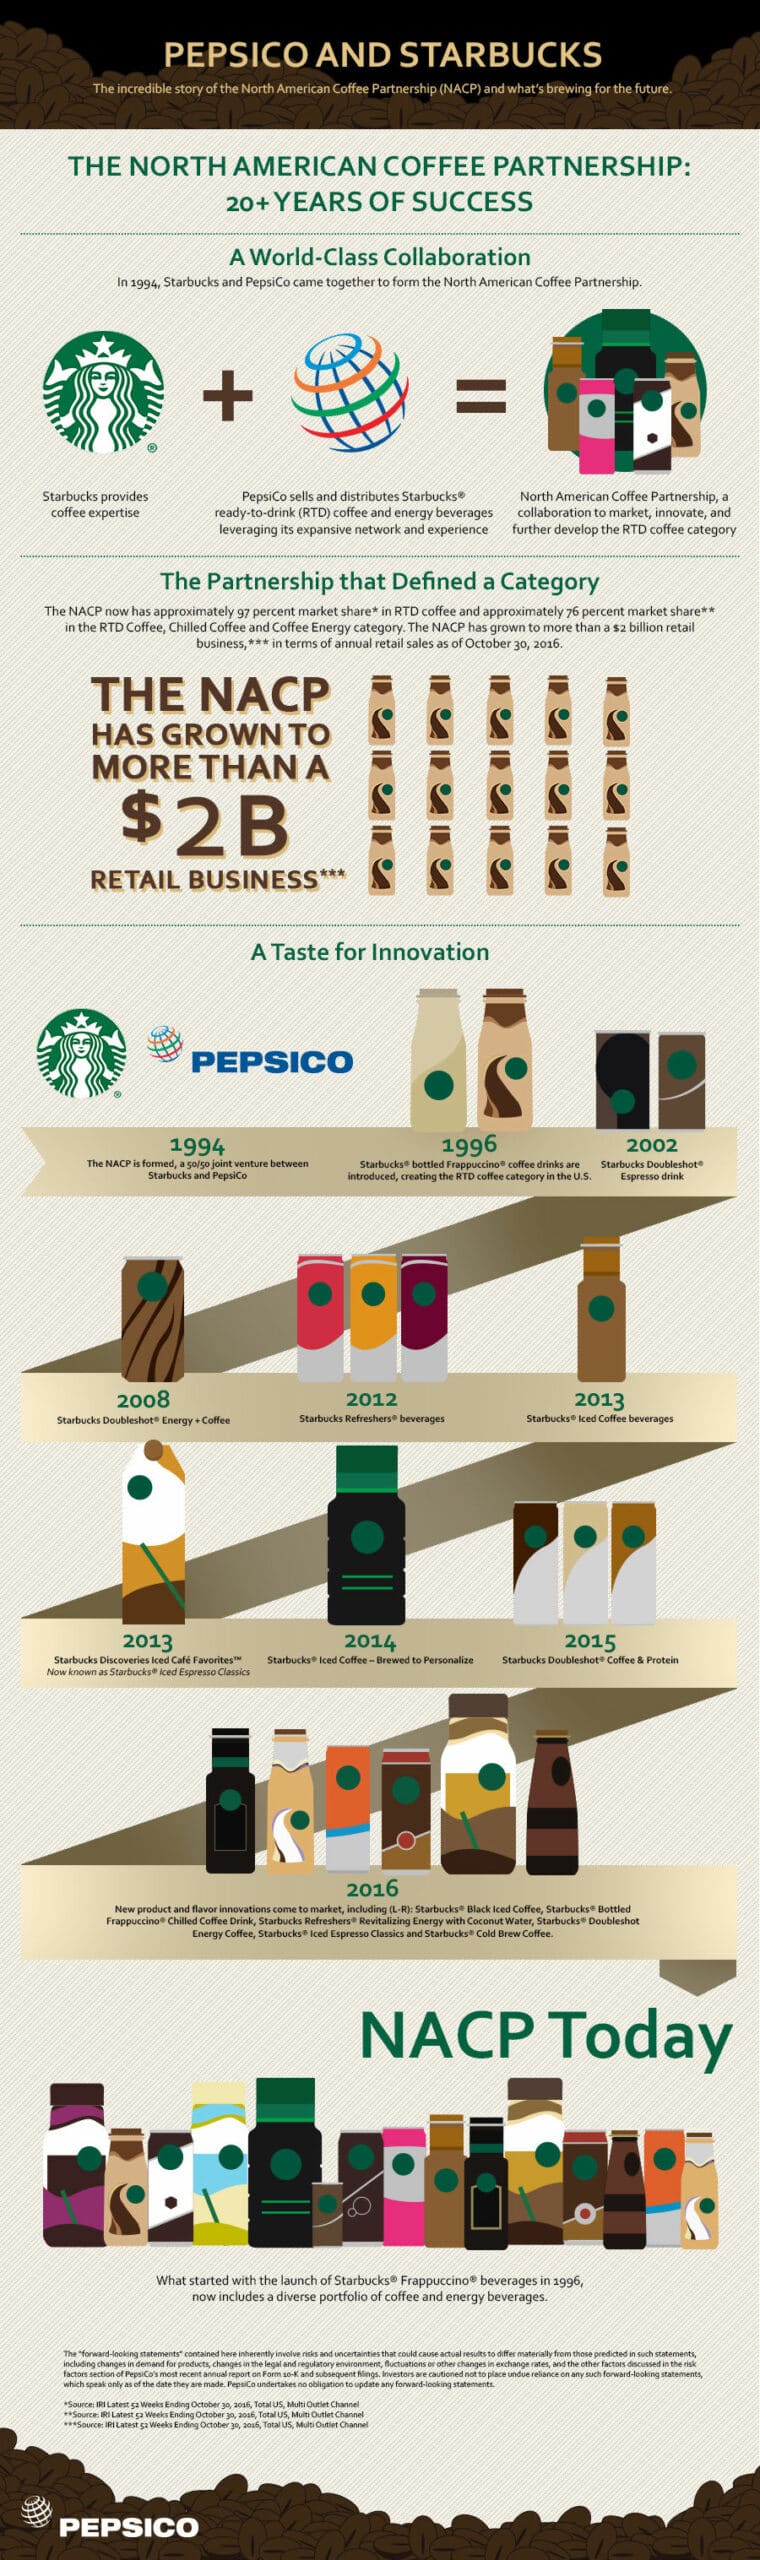 Timeline of Pepsico's Partnership with Starbucks